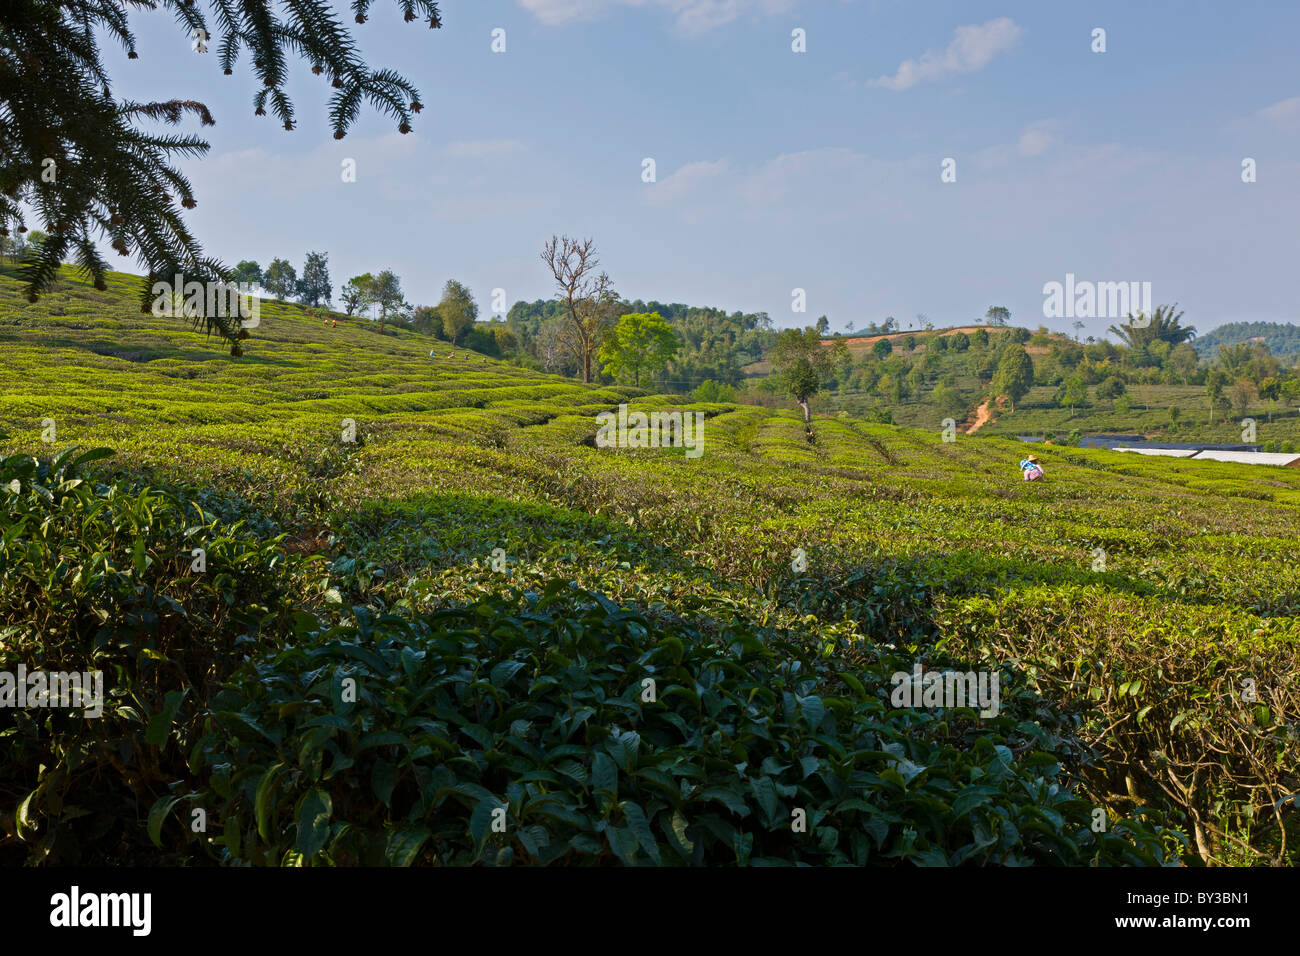 Tea plantation, Tea Research Institute, Yunnan Province, Xishuangbanna, China. JMH4220 Stock Photo